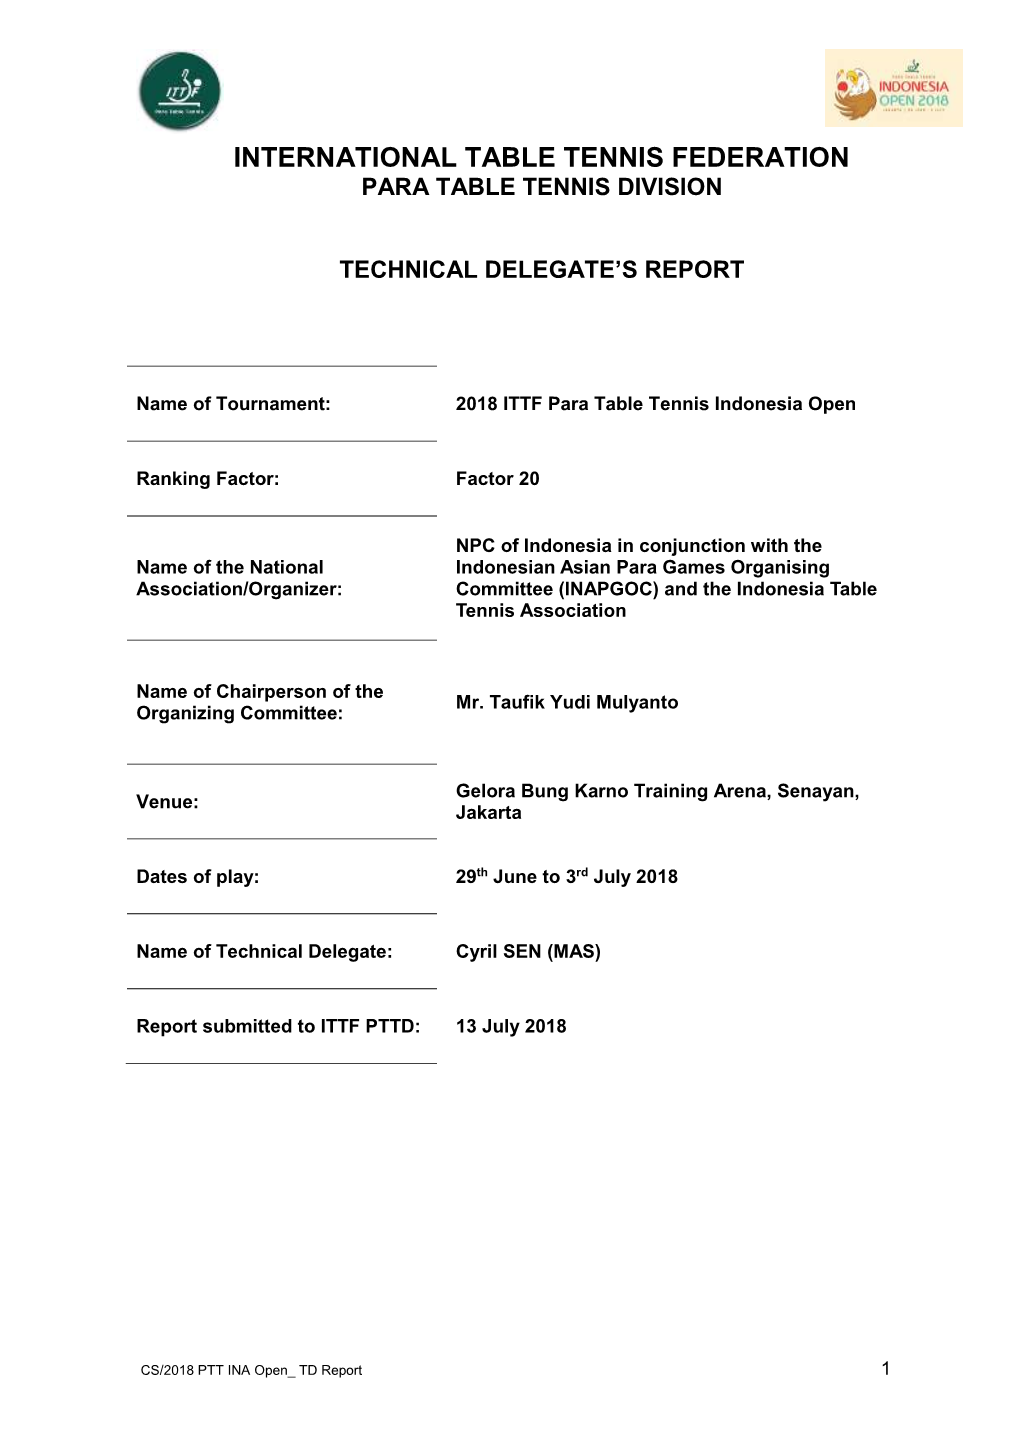 Technical Delegate Report